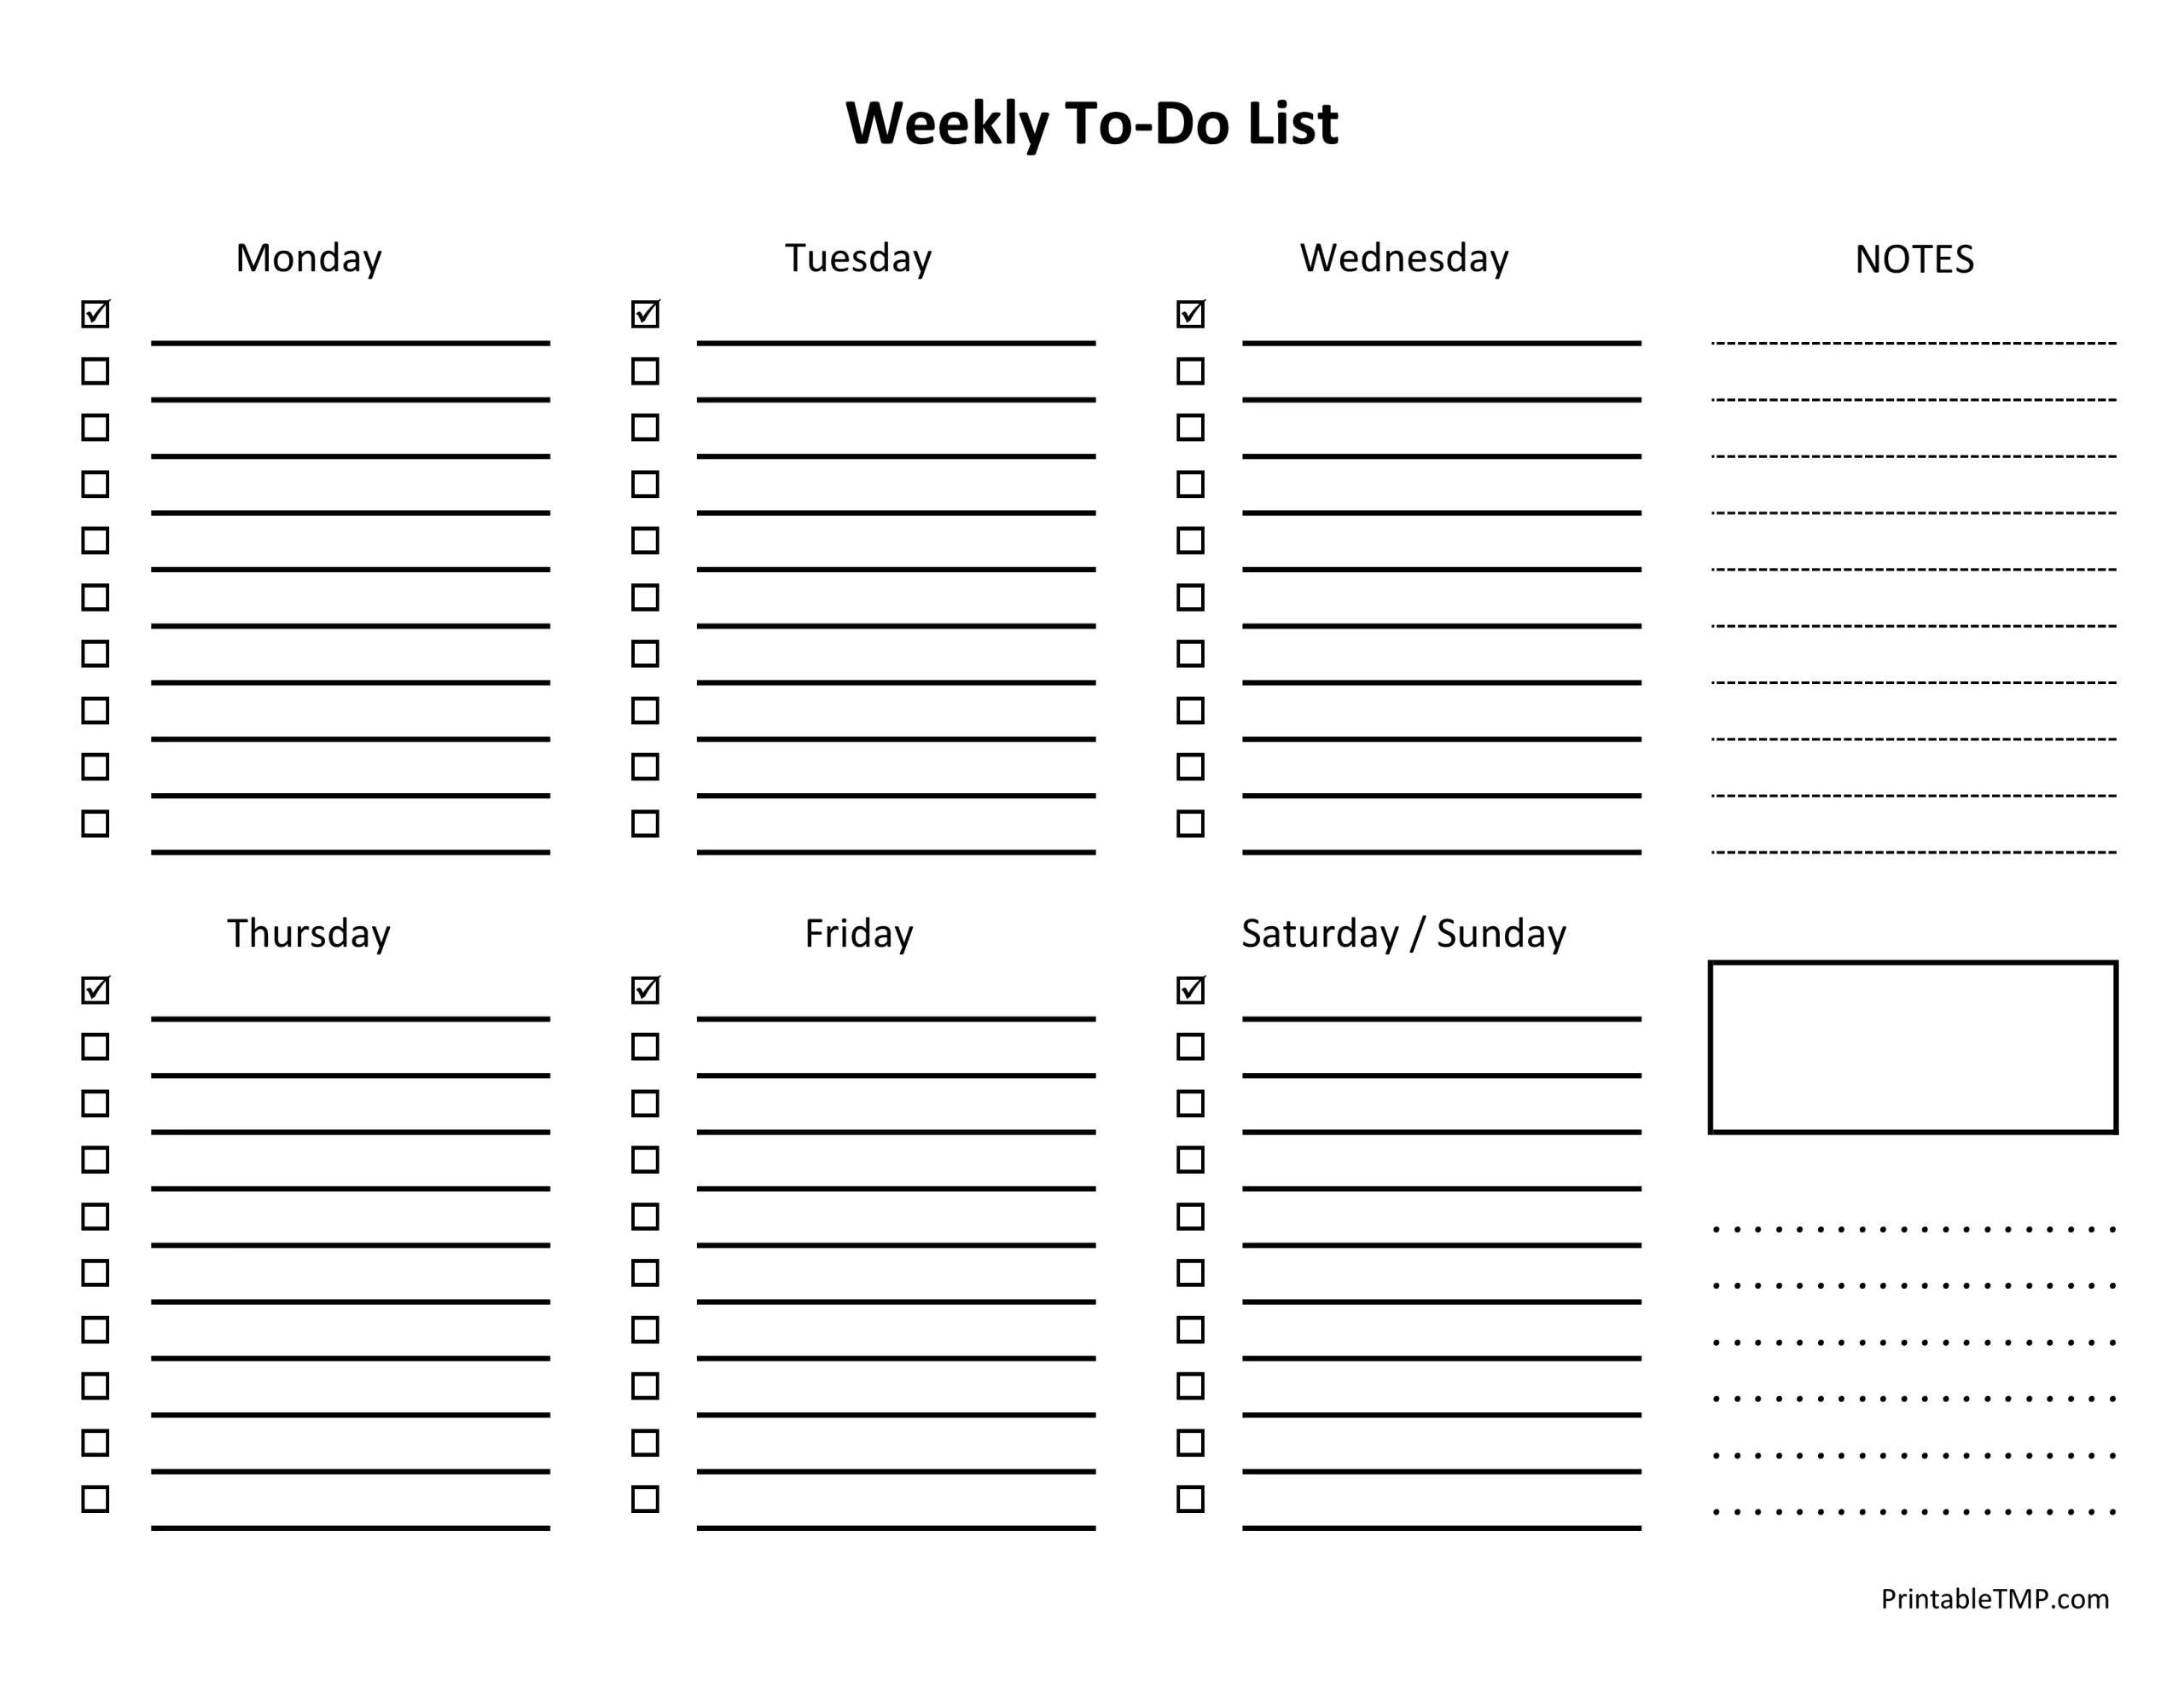 weekly-to-do-list-printables-15-free-lists-printabulls